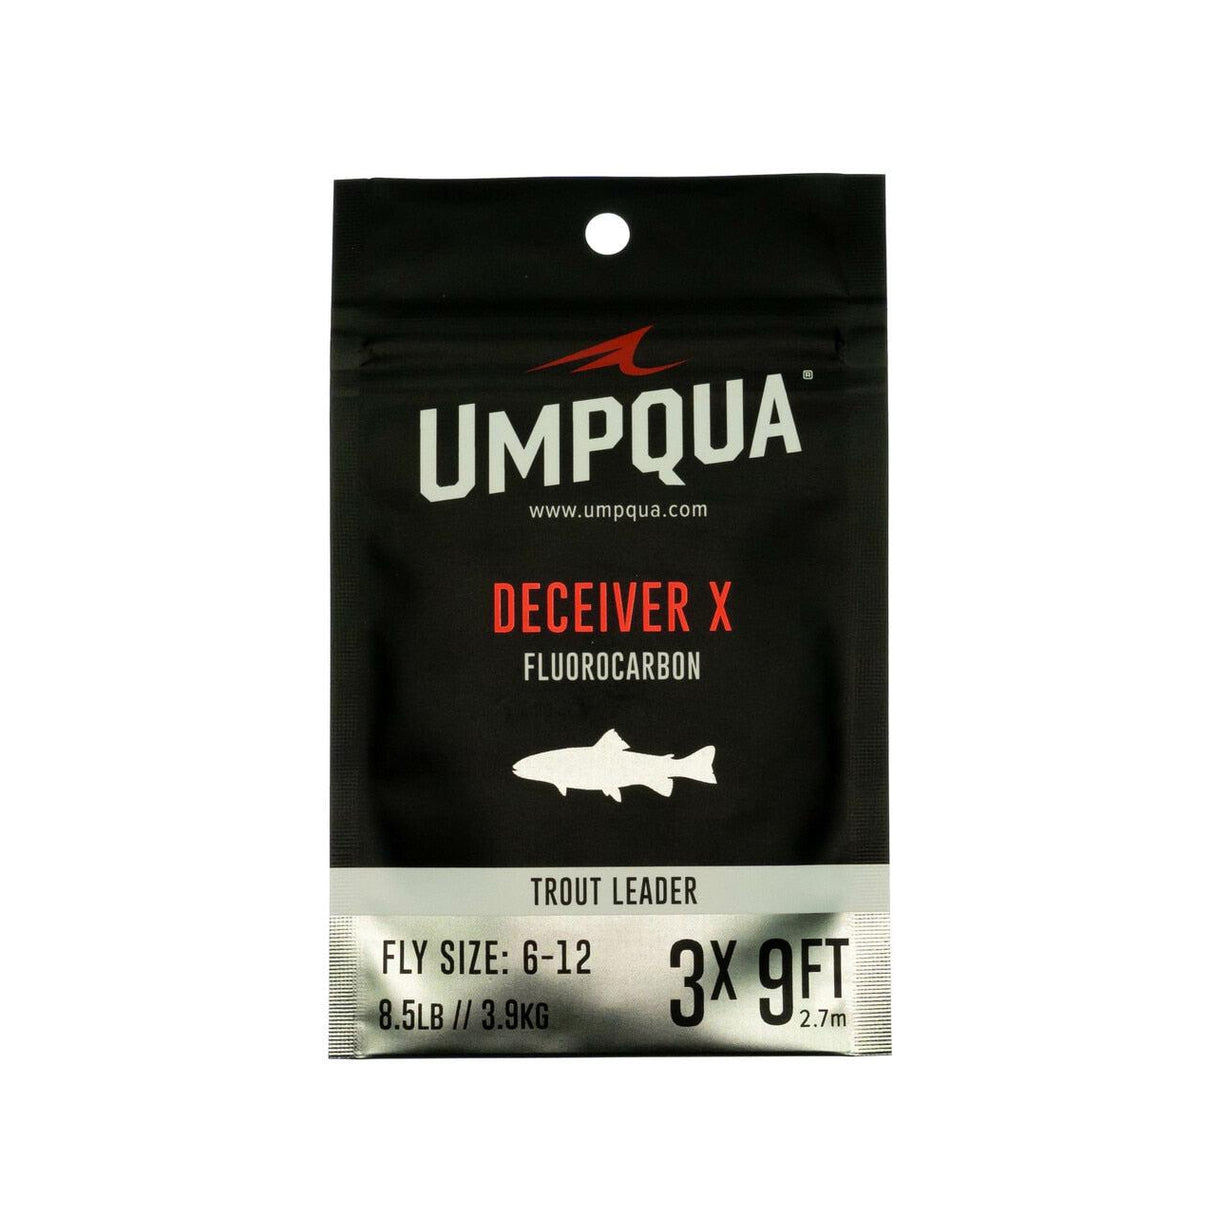 Umpqua Deceiver x Fluorocarbon 9' Leader 5X